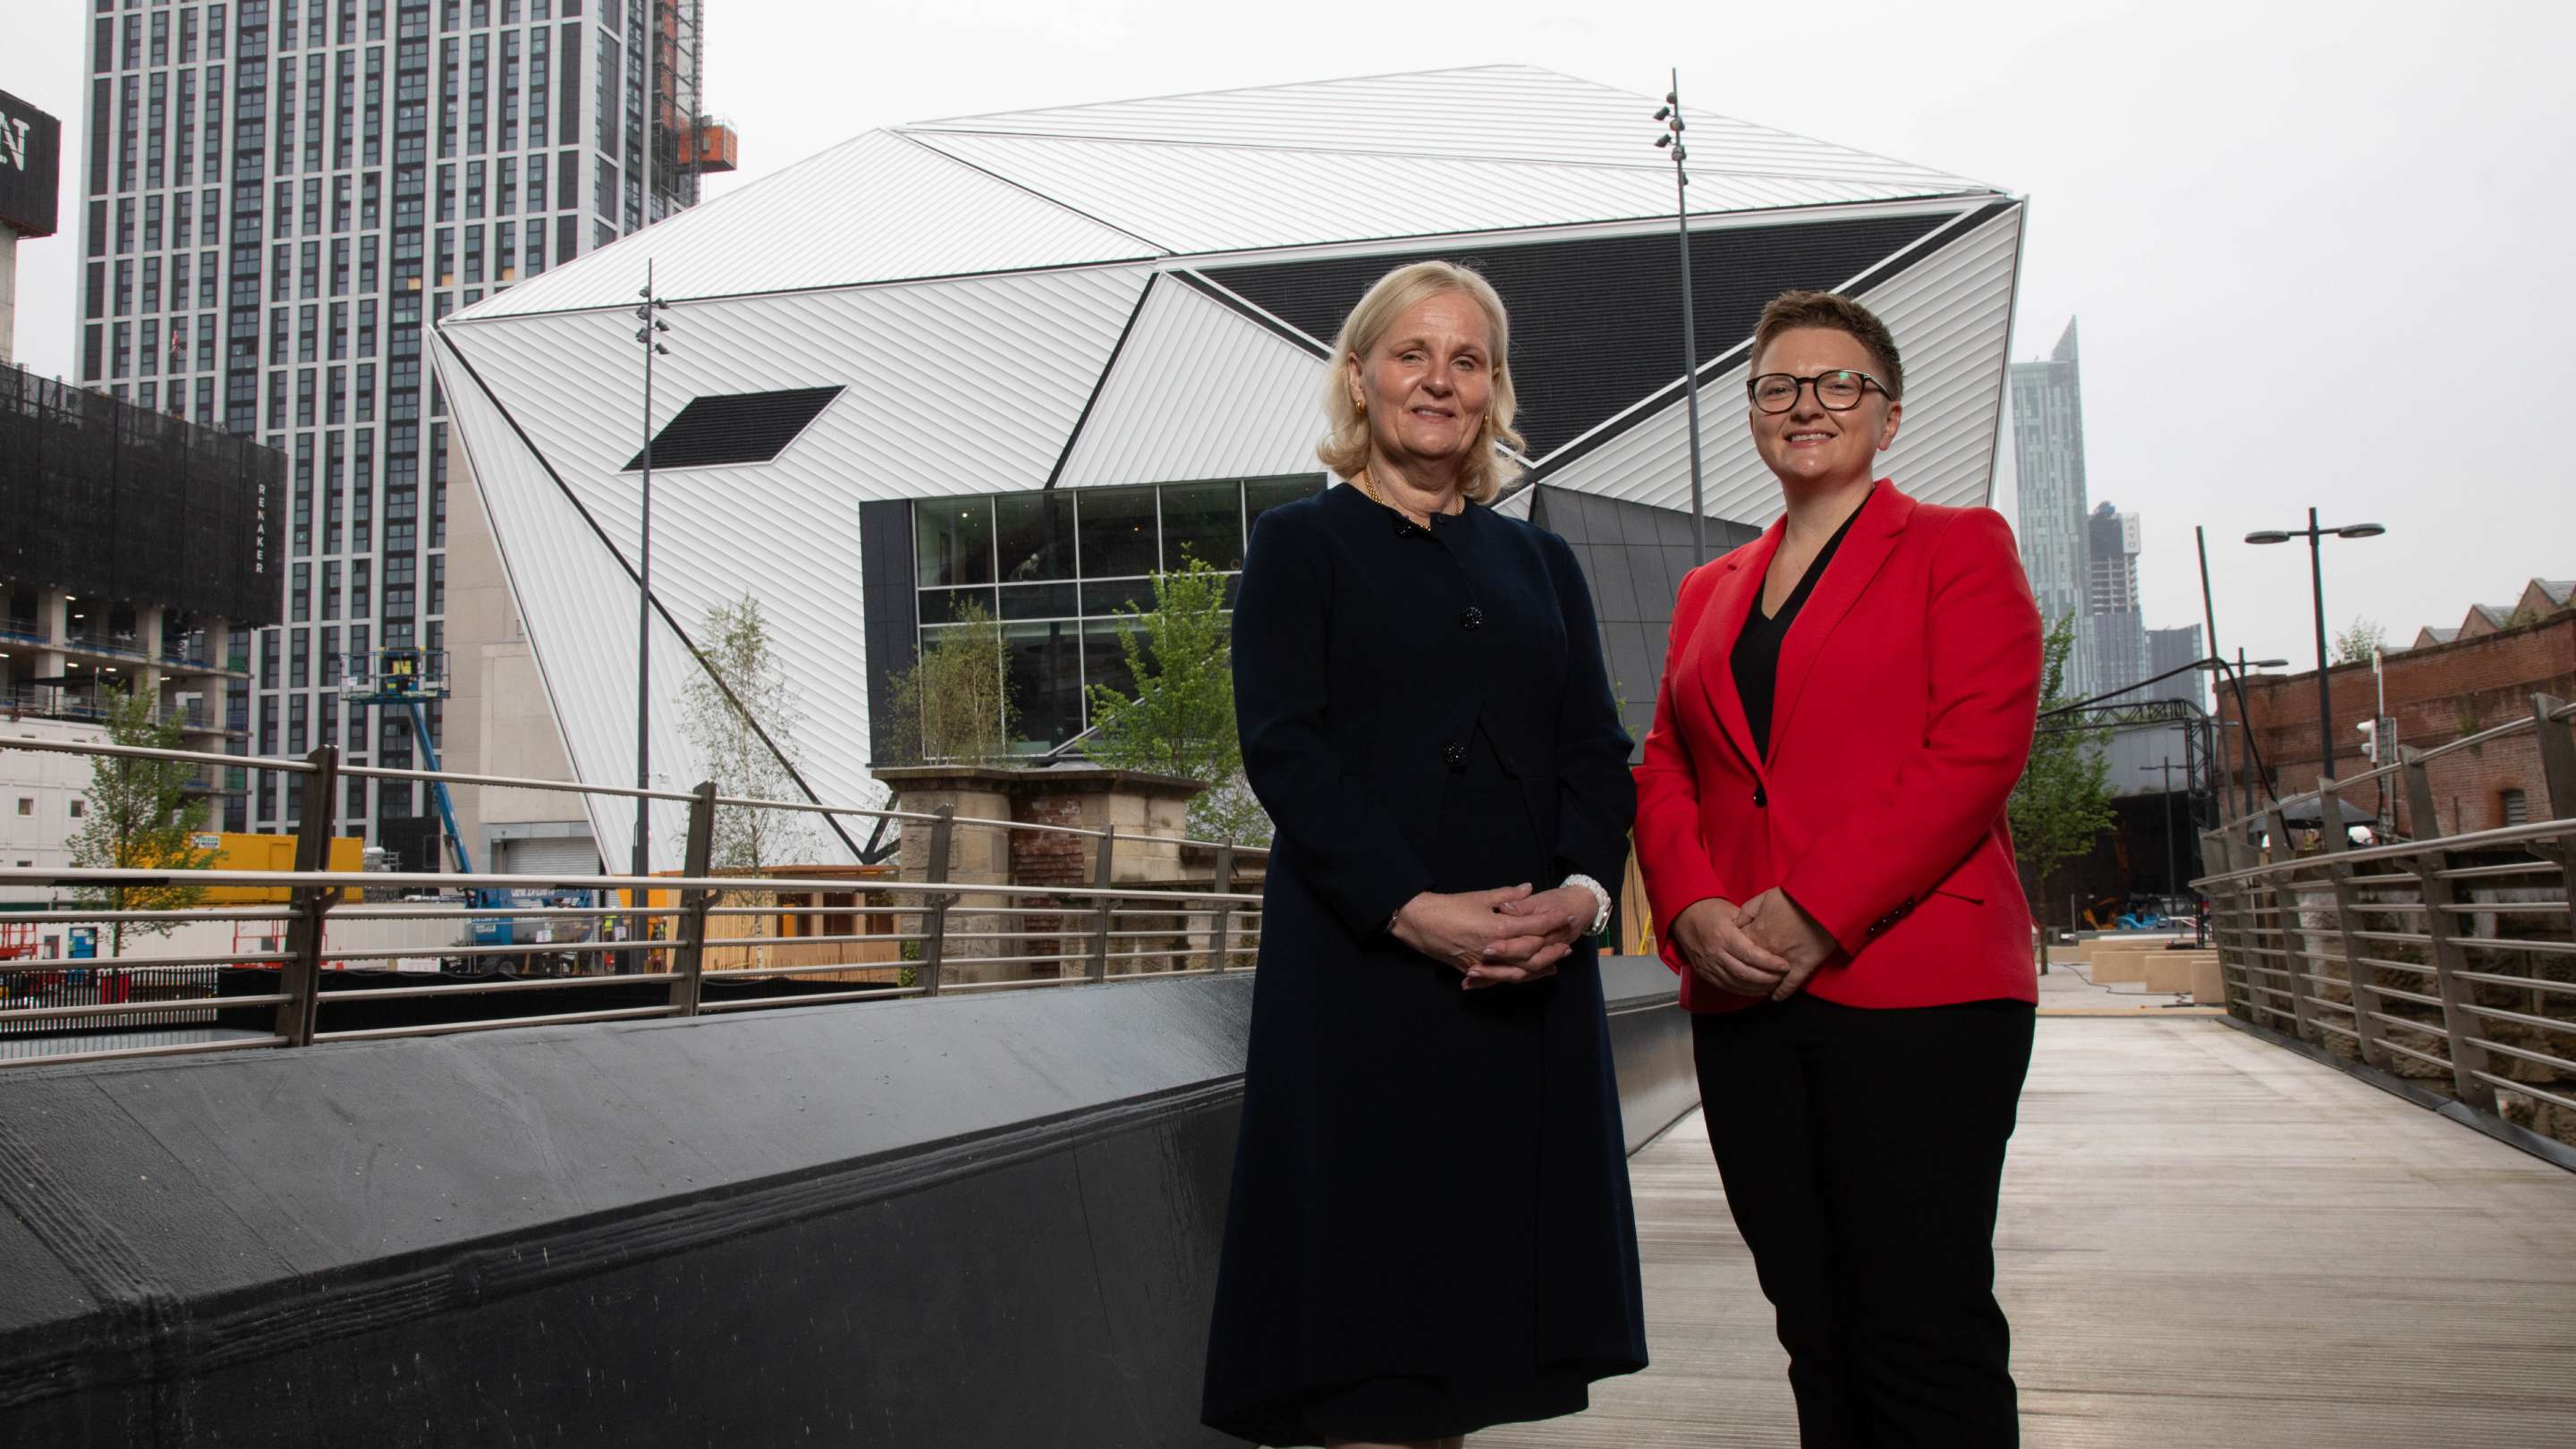 Amanda Blanc, Aviva Group CEO, with Bev Craig, Leader, Manchester City Council